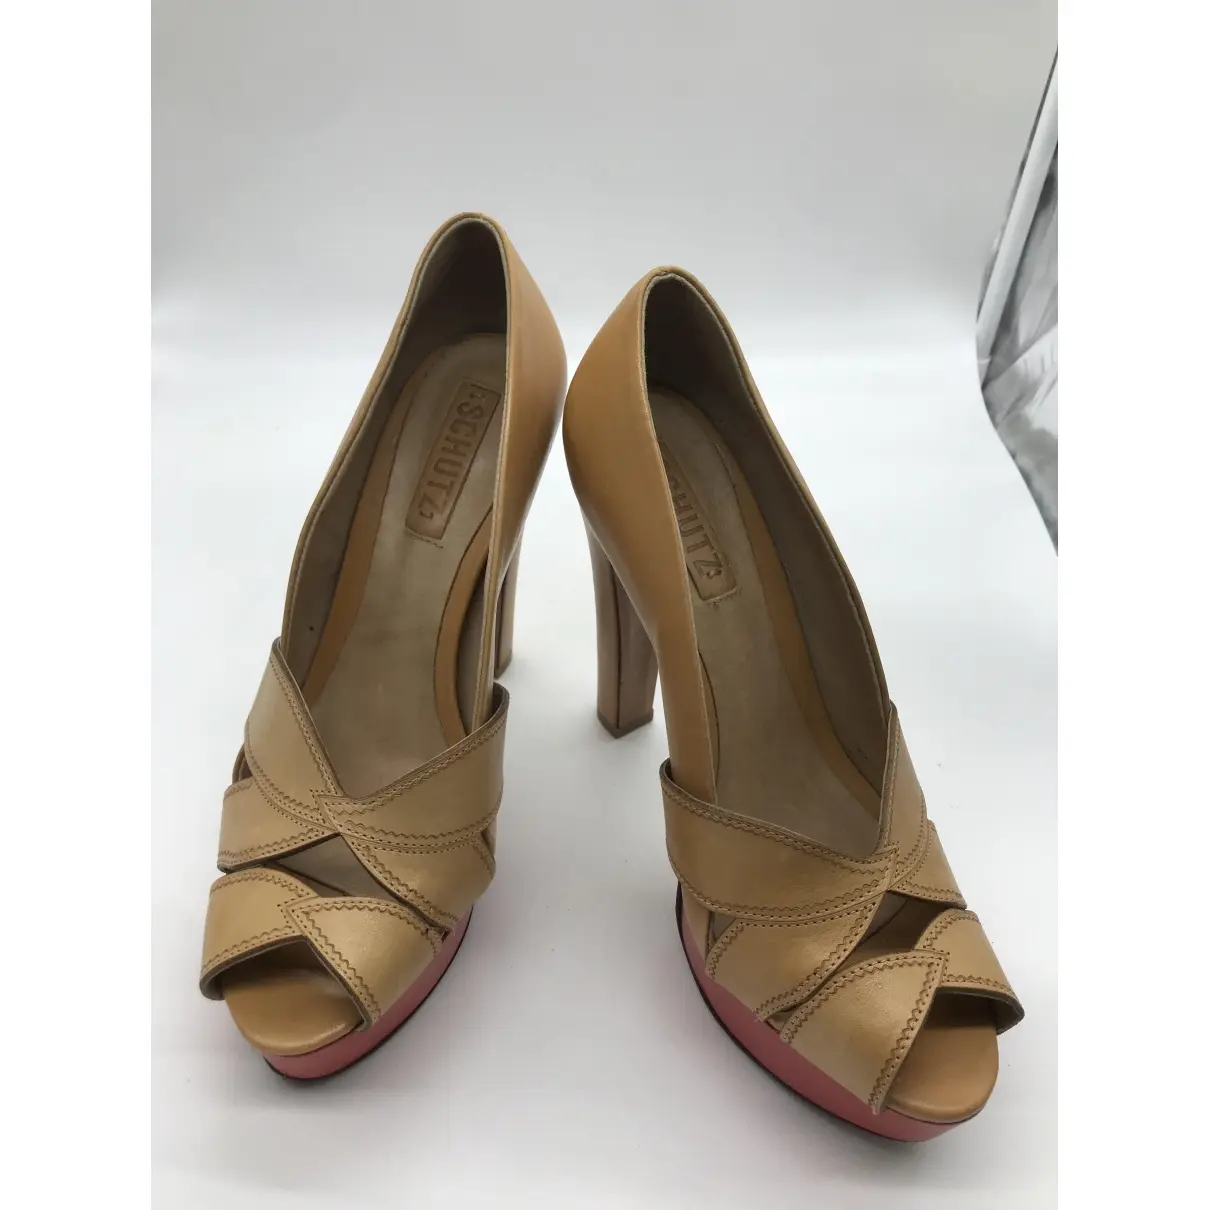 Schutz Leather heels for sale